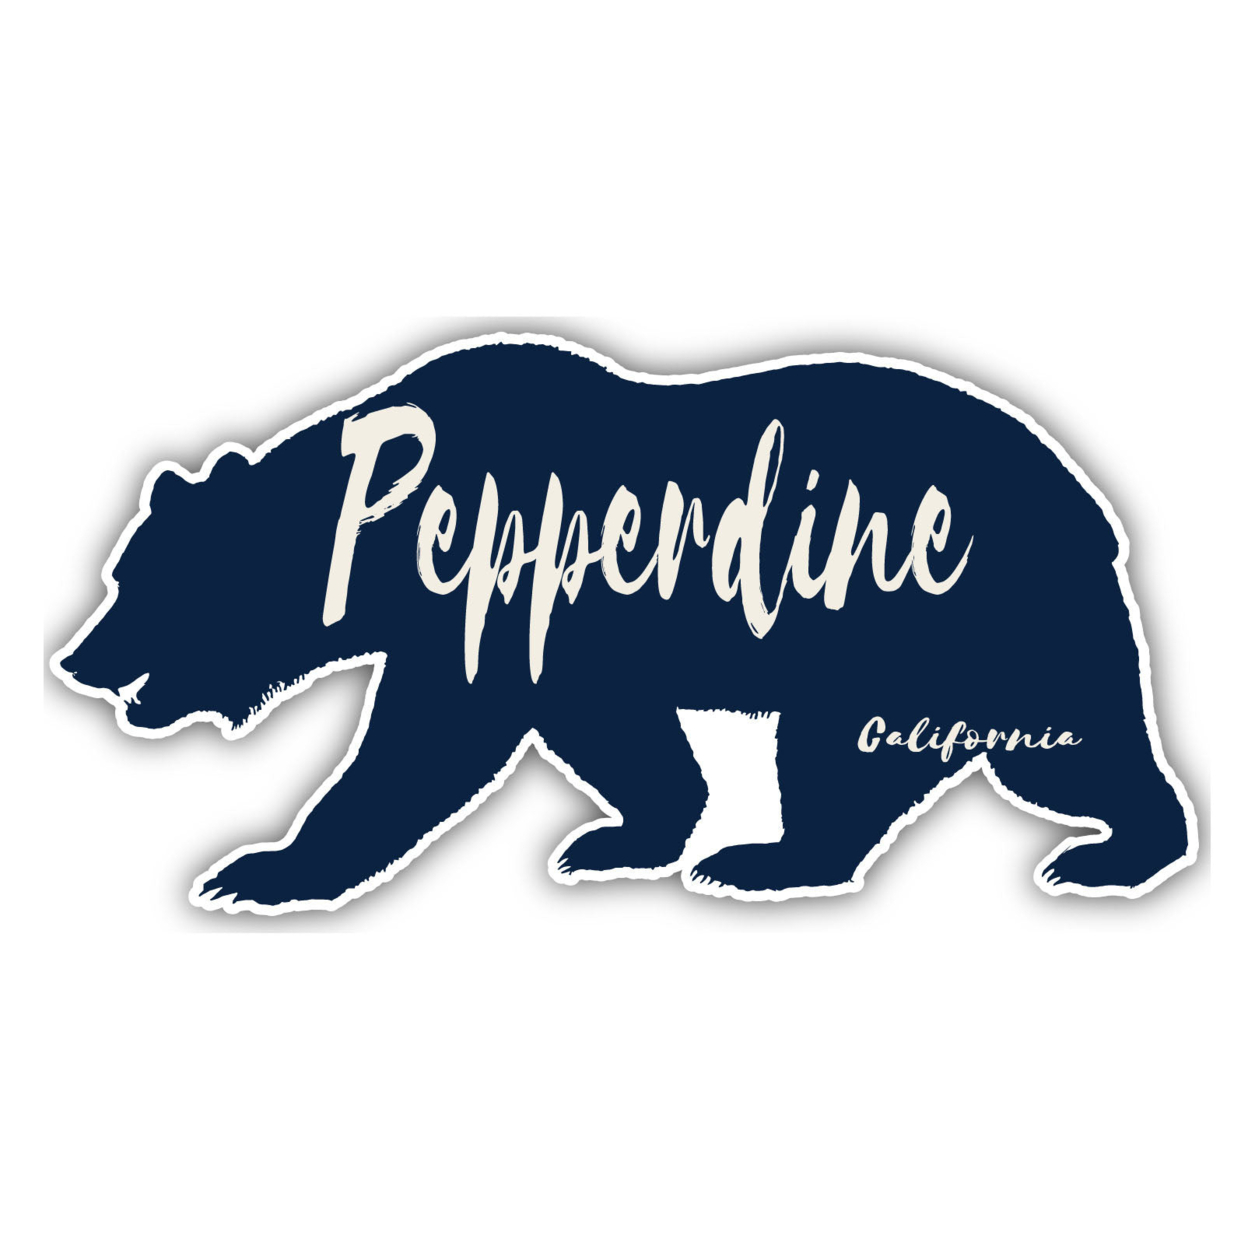 Pepperdine California Souvenir Decorative Stickers (Choose Theme And Size) - Single Unit, 2-Inch, Camp Life